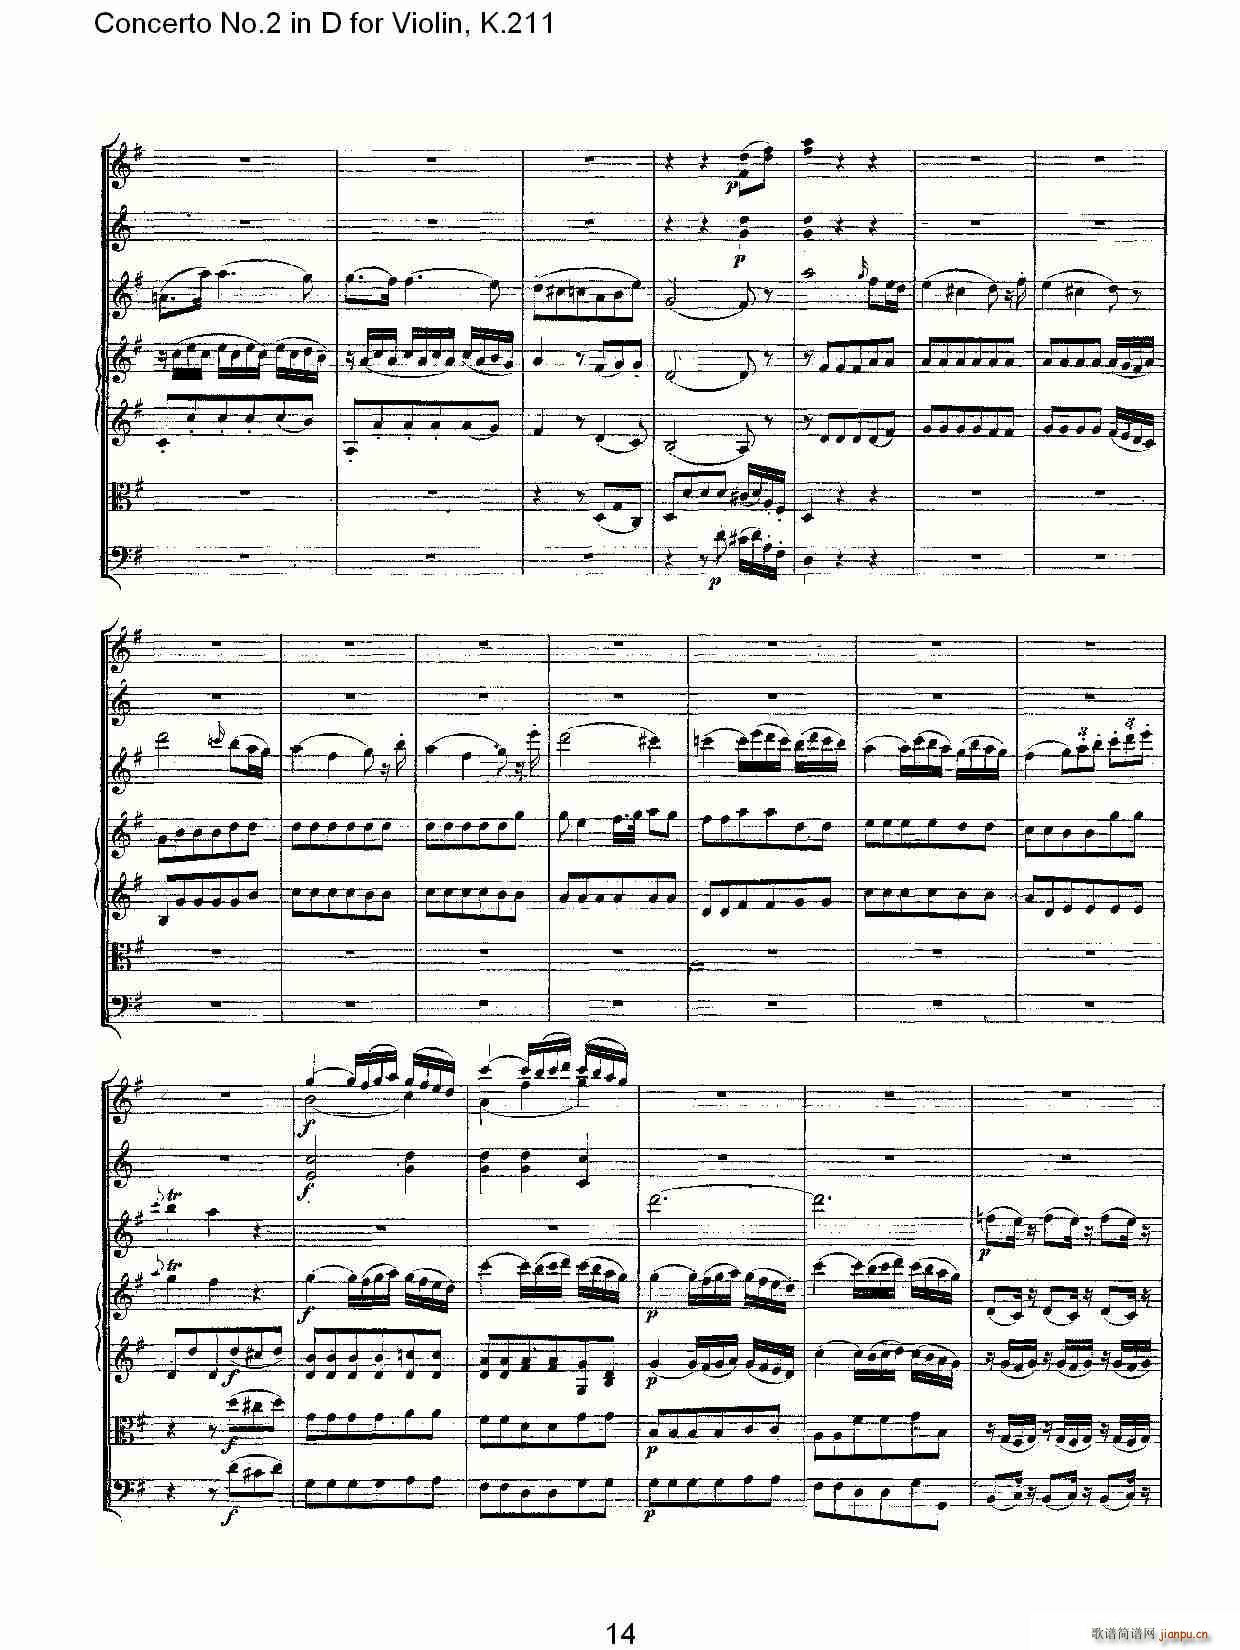 Concerto No.2 in D for Violin, K.211(С)9